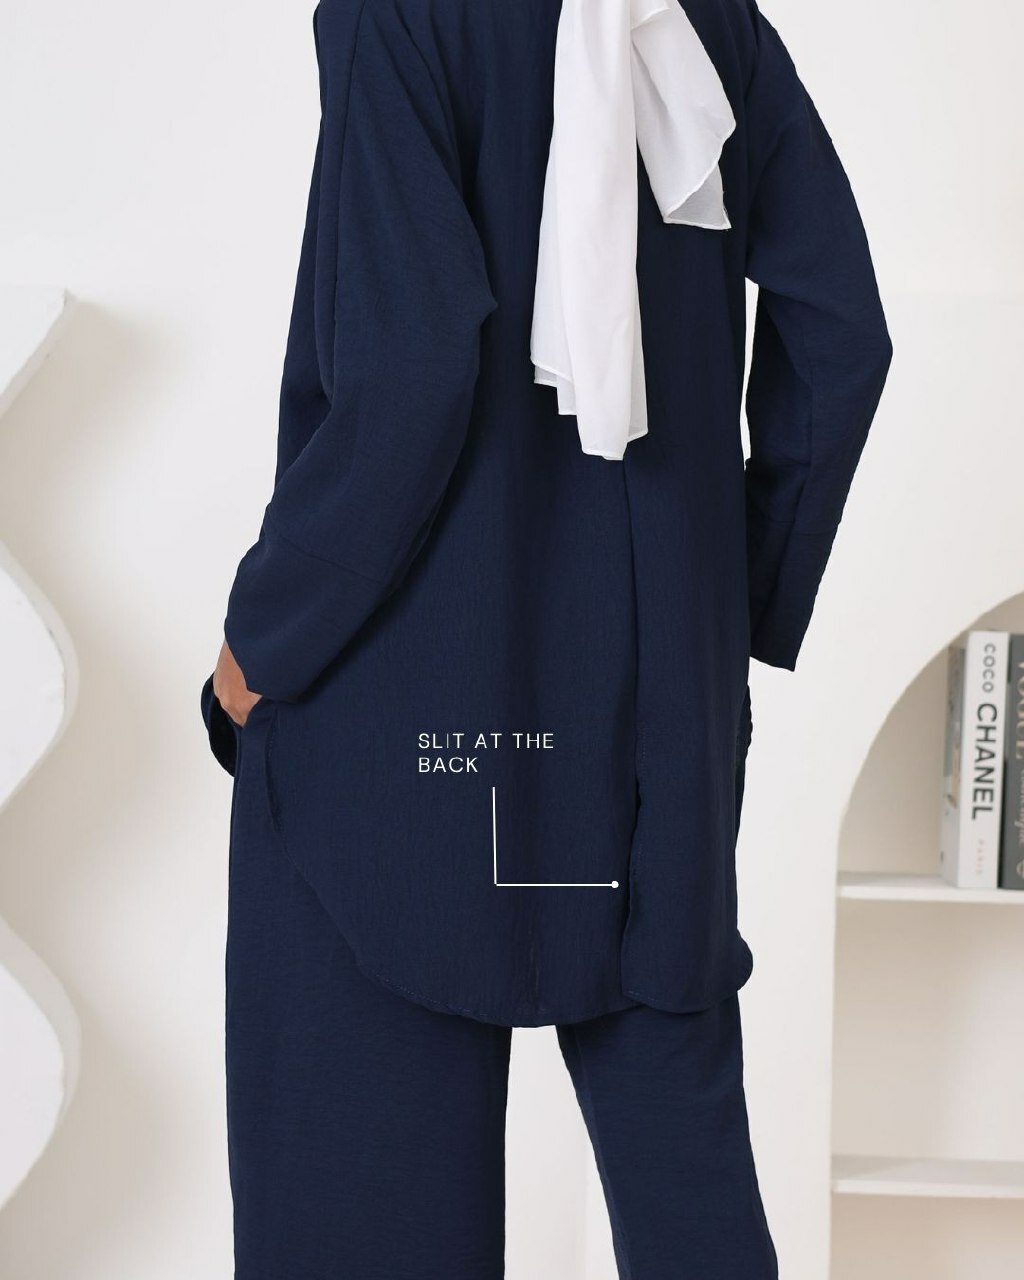 haura-wear-cotton-baju-muslimah-set-seluar-suit-muslimah-set-baju-dan-seluar-muslimah-palazzo (5)